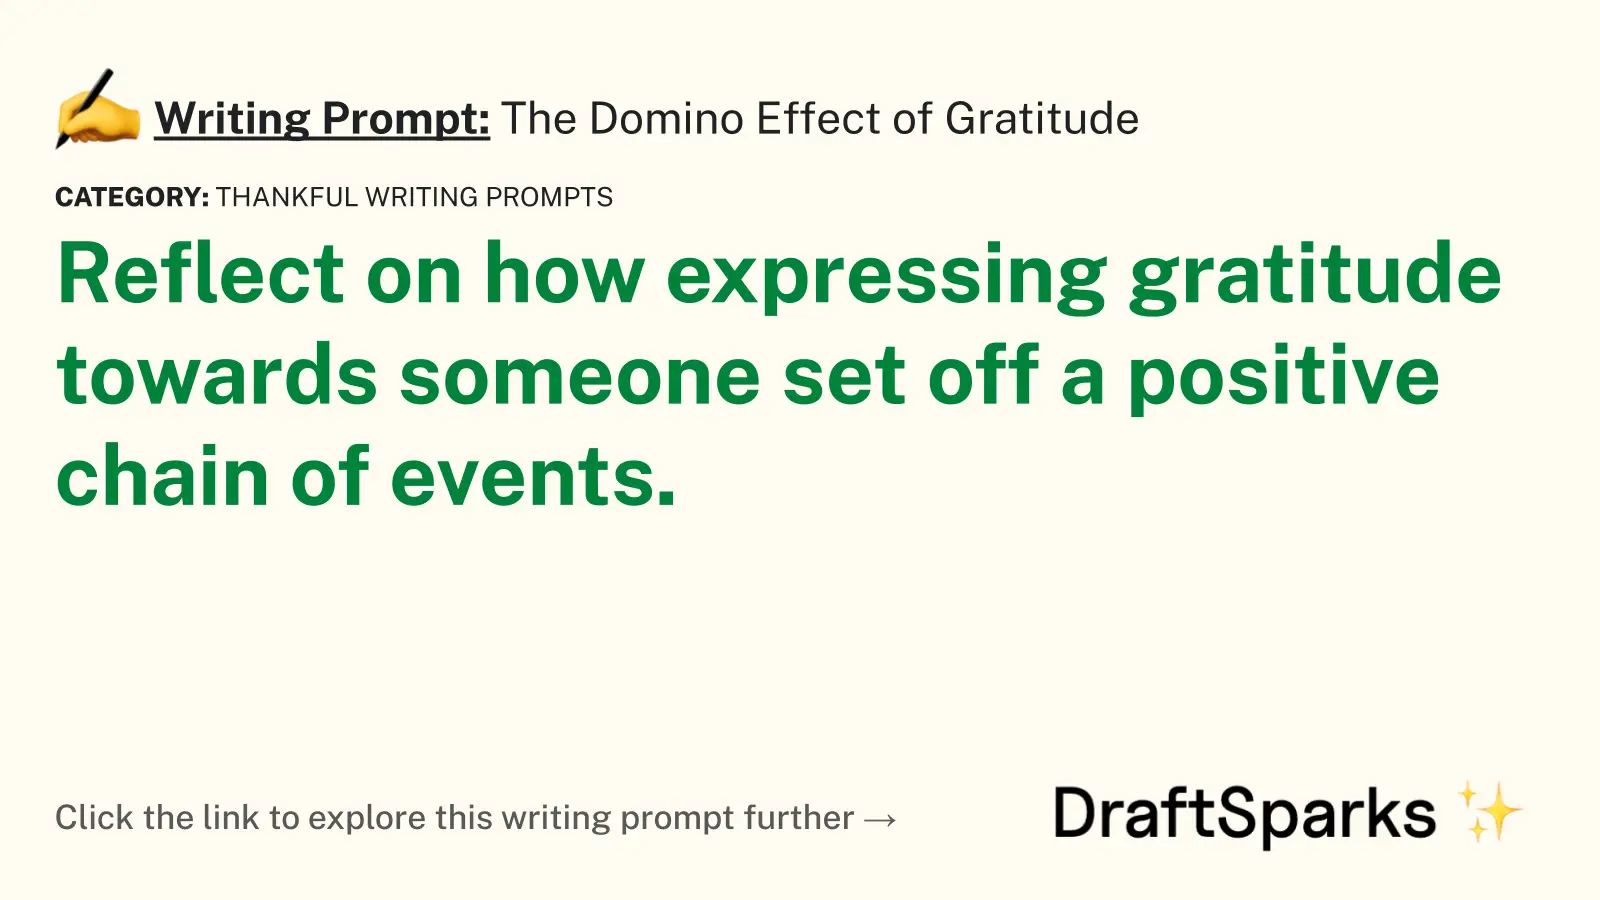 The Domino Effect of Gratitude